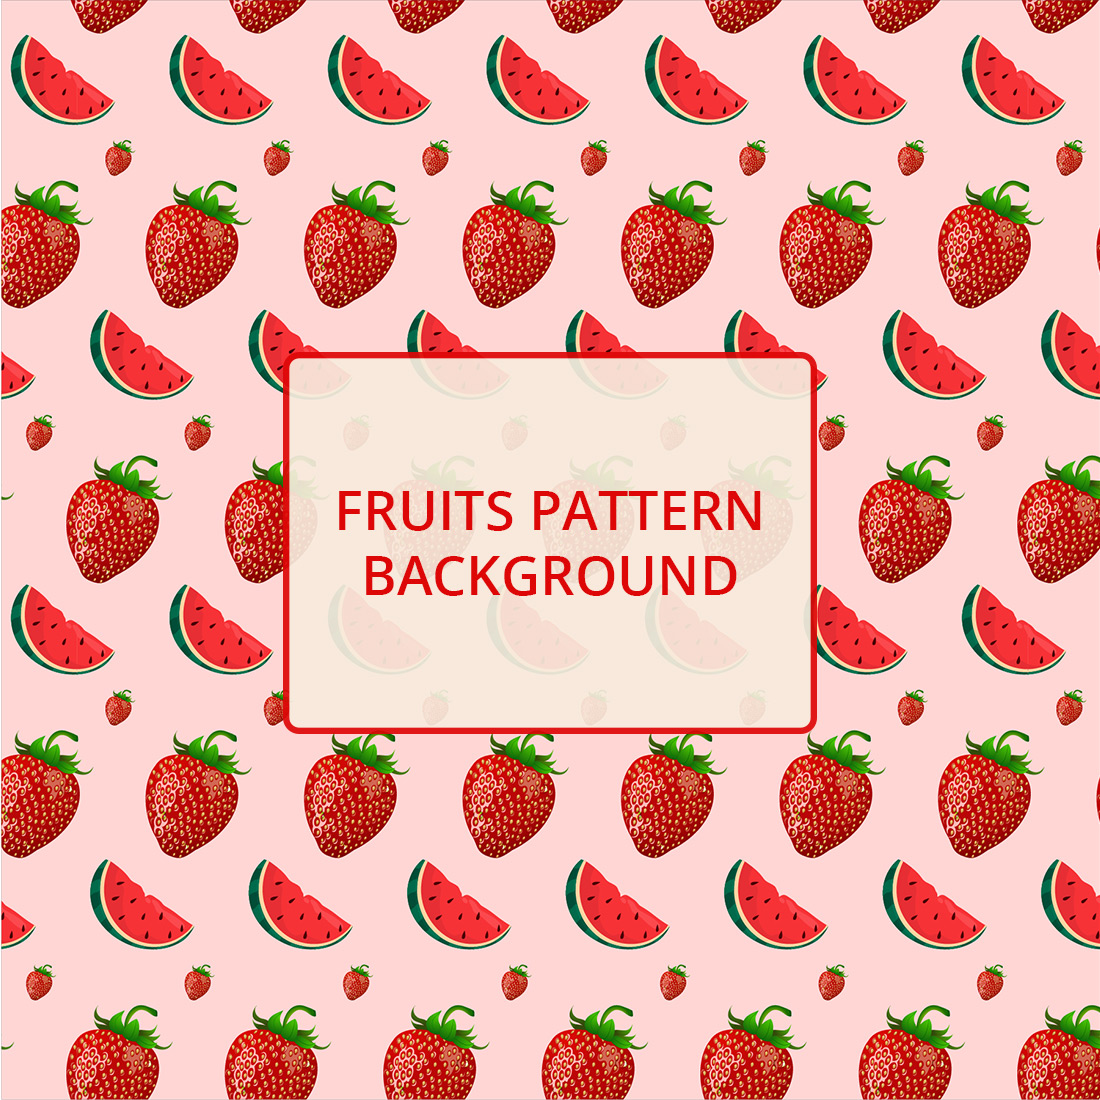 Strawberry & watermelon pattern design cover image.